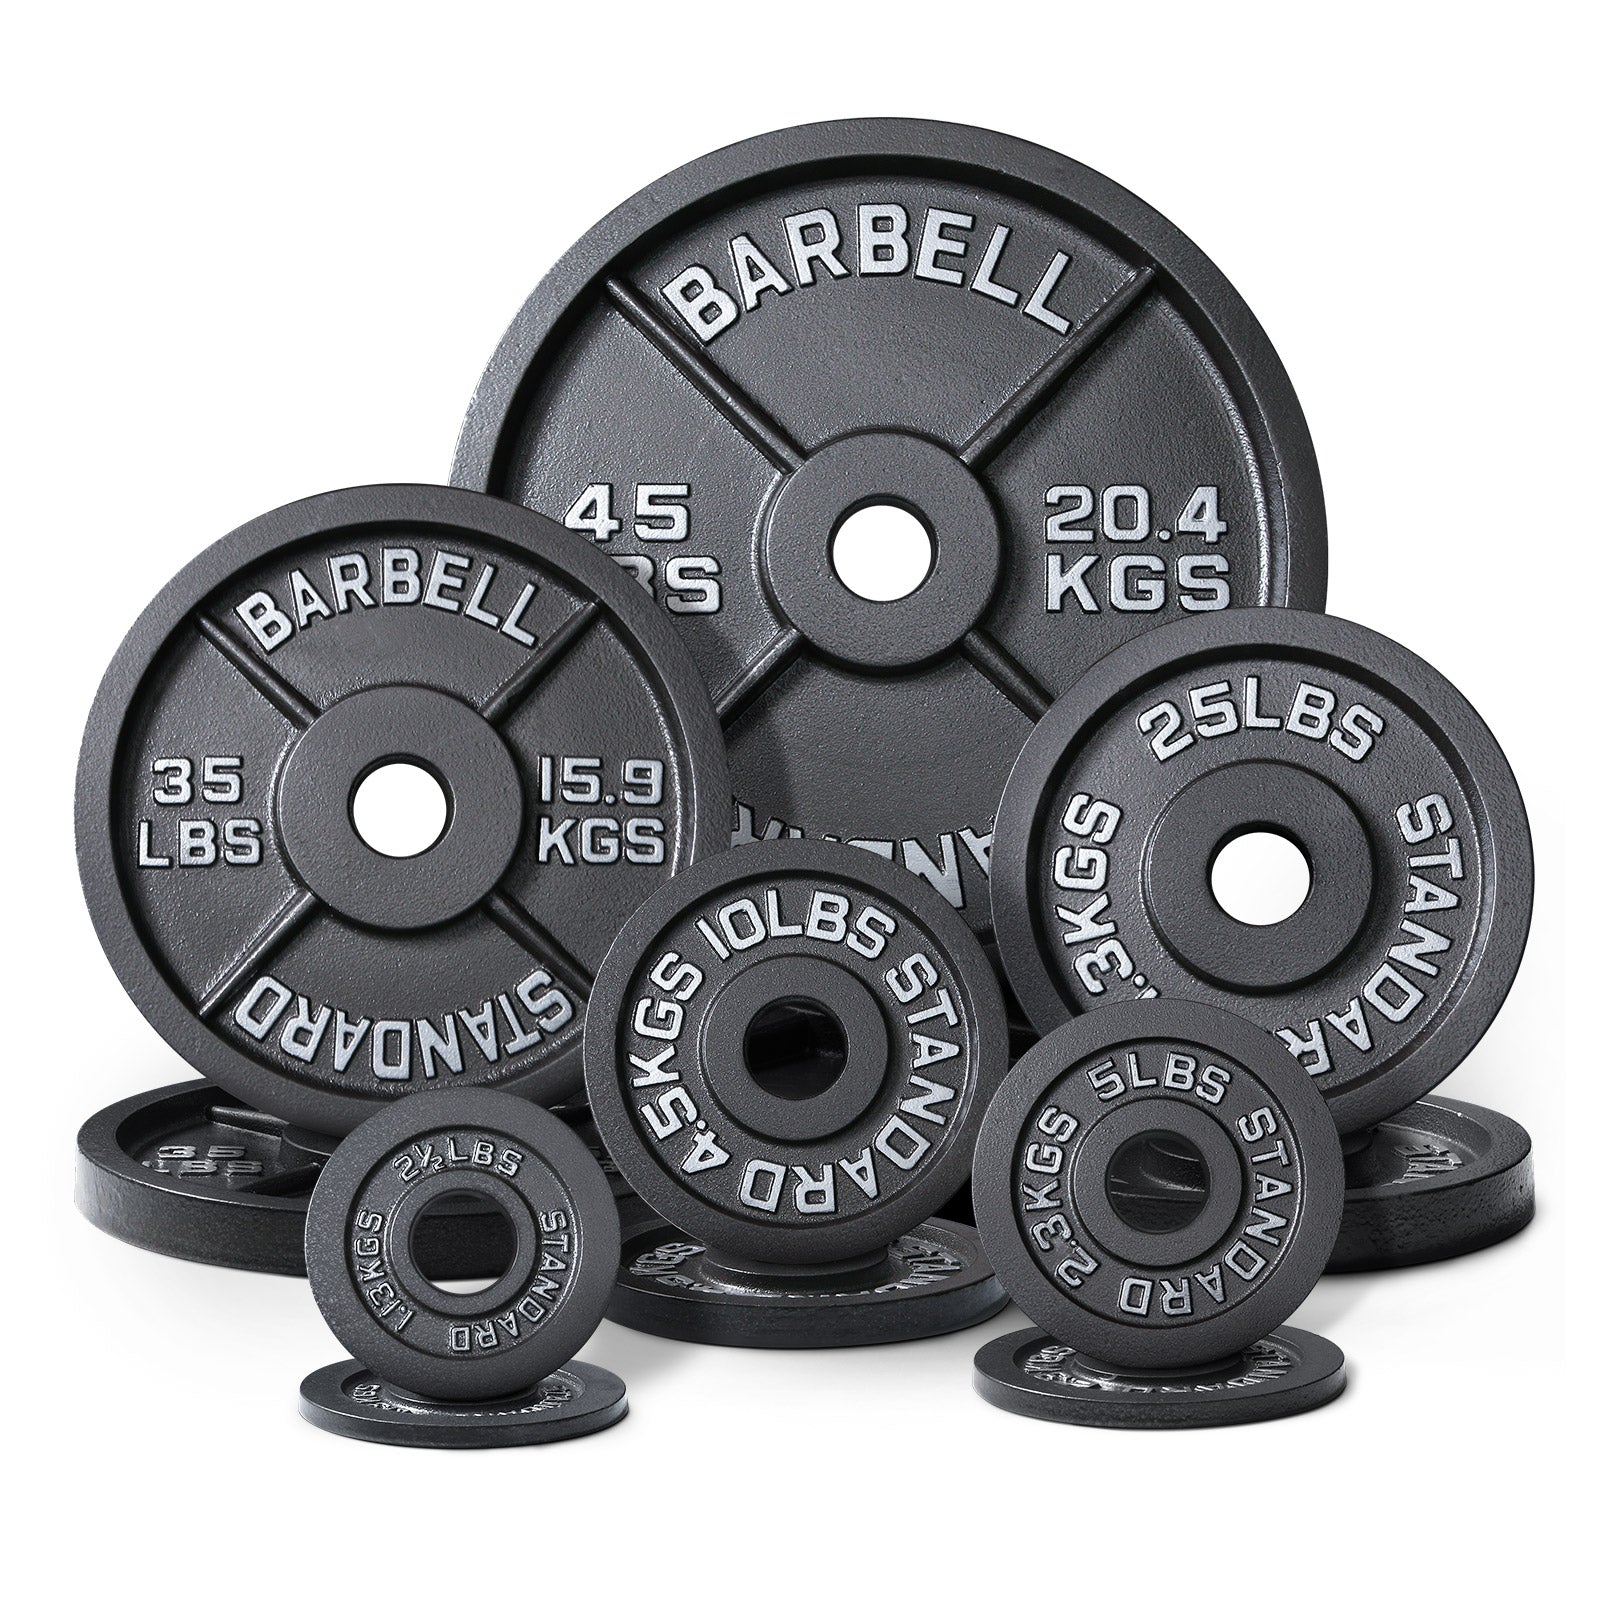 Regular Black Cast Iron Plates for Dumbbells and Barbells